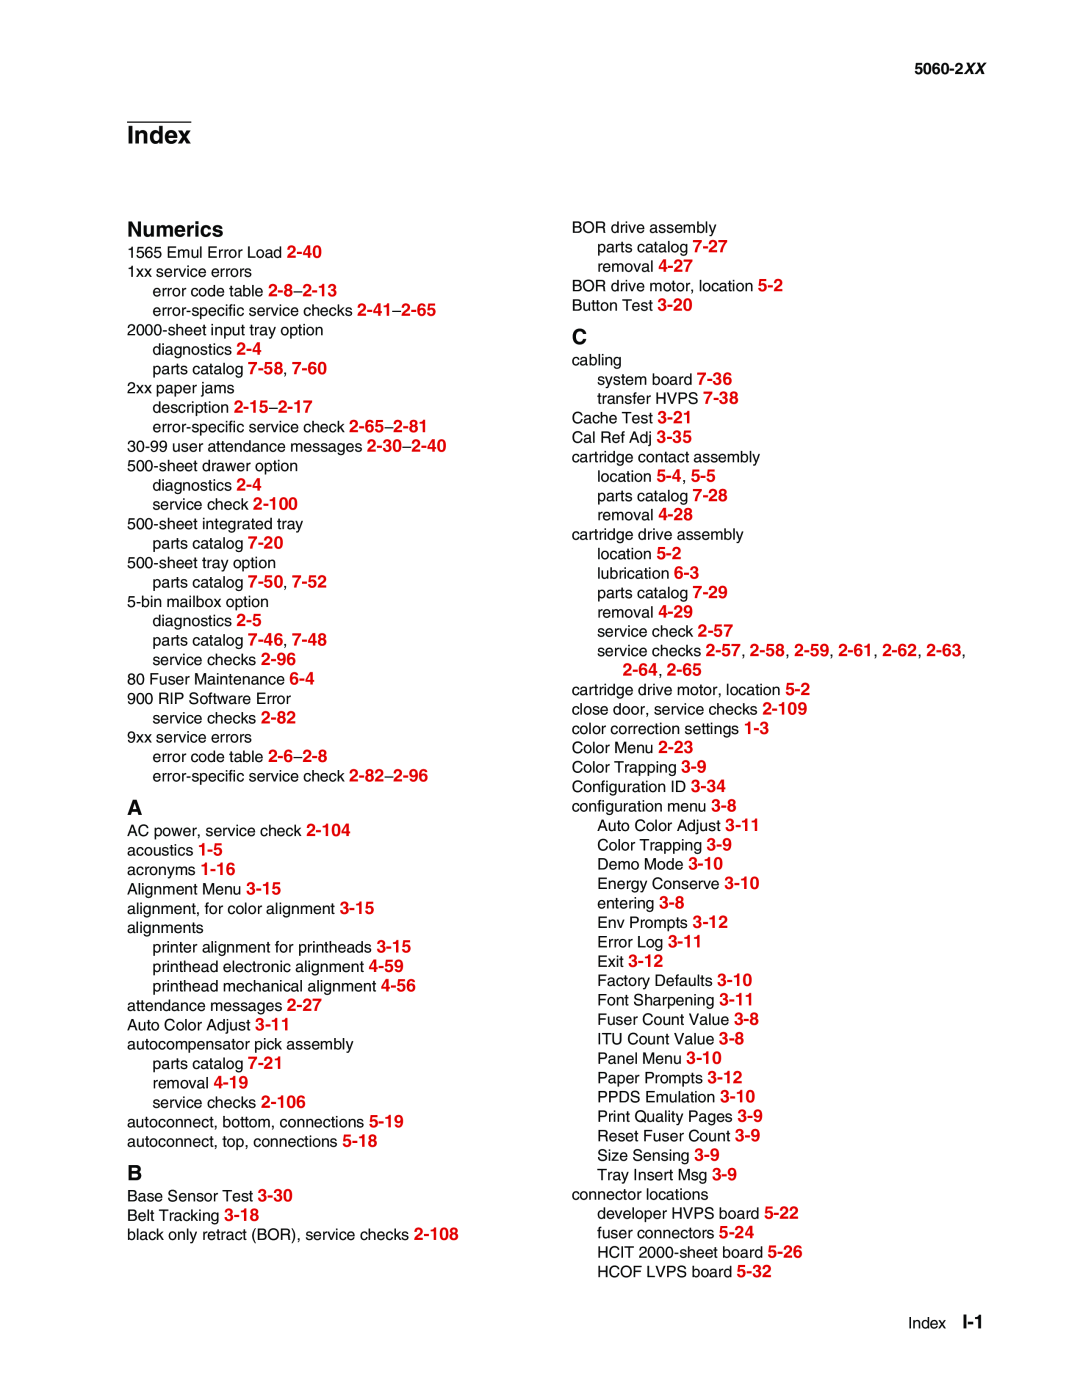 Lexmark 5060-2XX manual Index, Numerics 